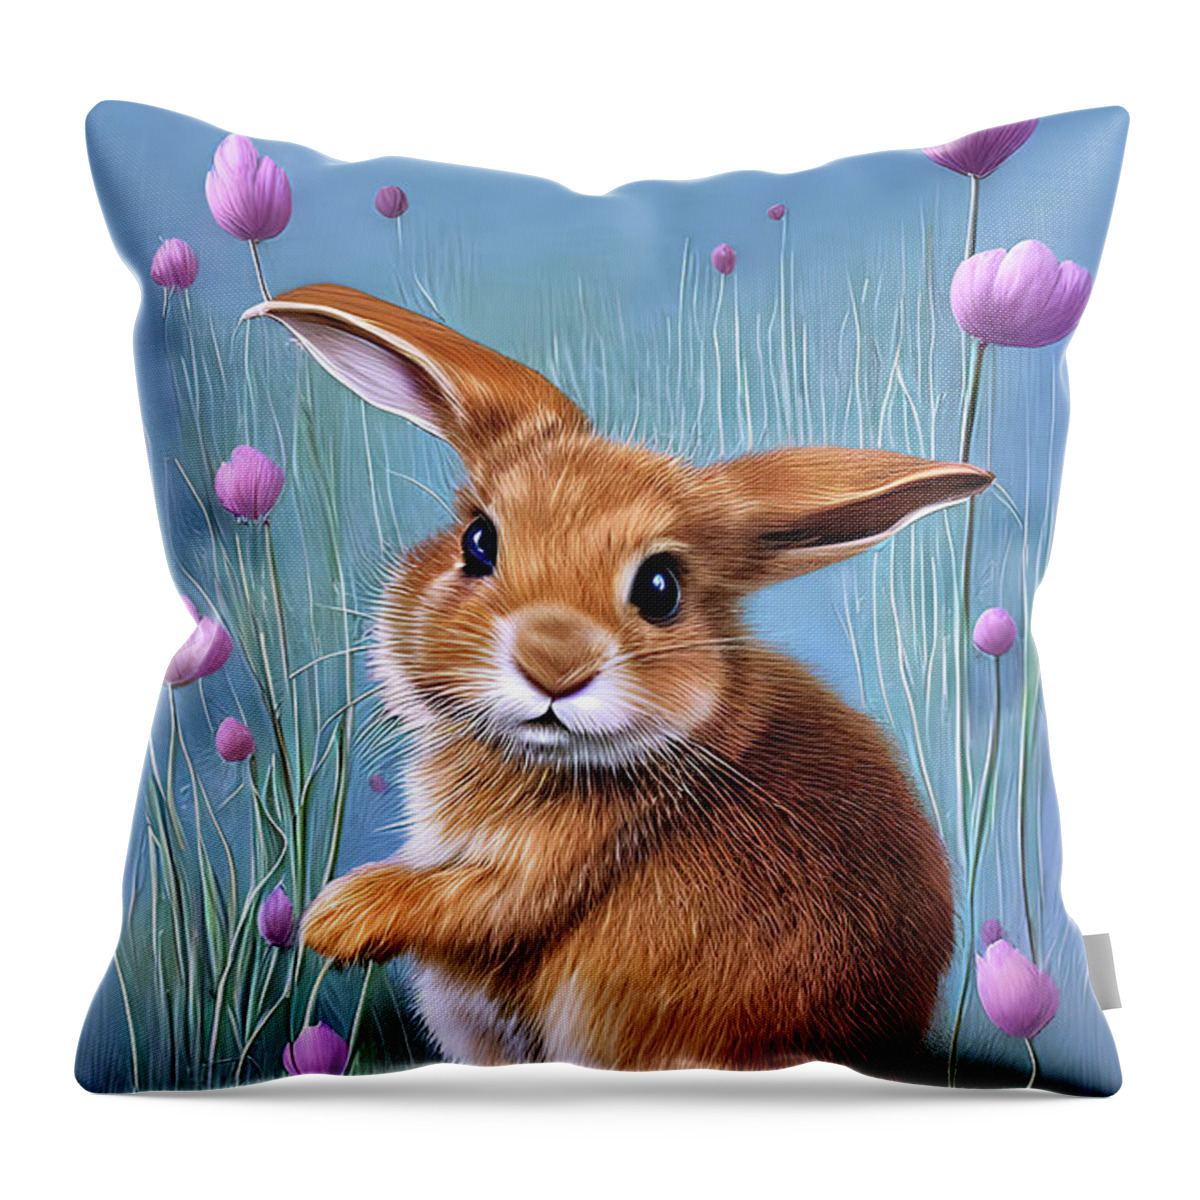 Rabbit Throw Pillow featuring the digital art Cute Bunny by Elaine Manley